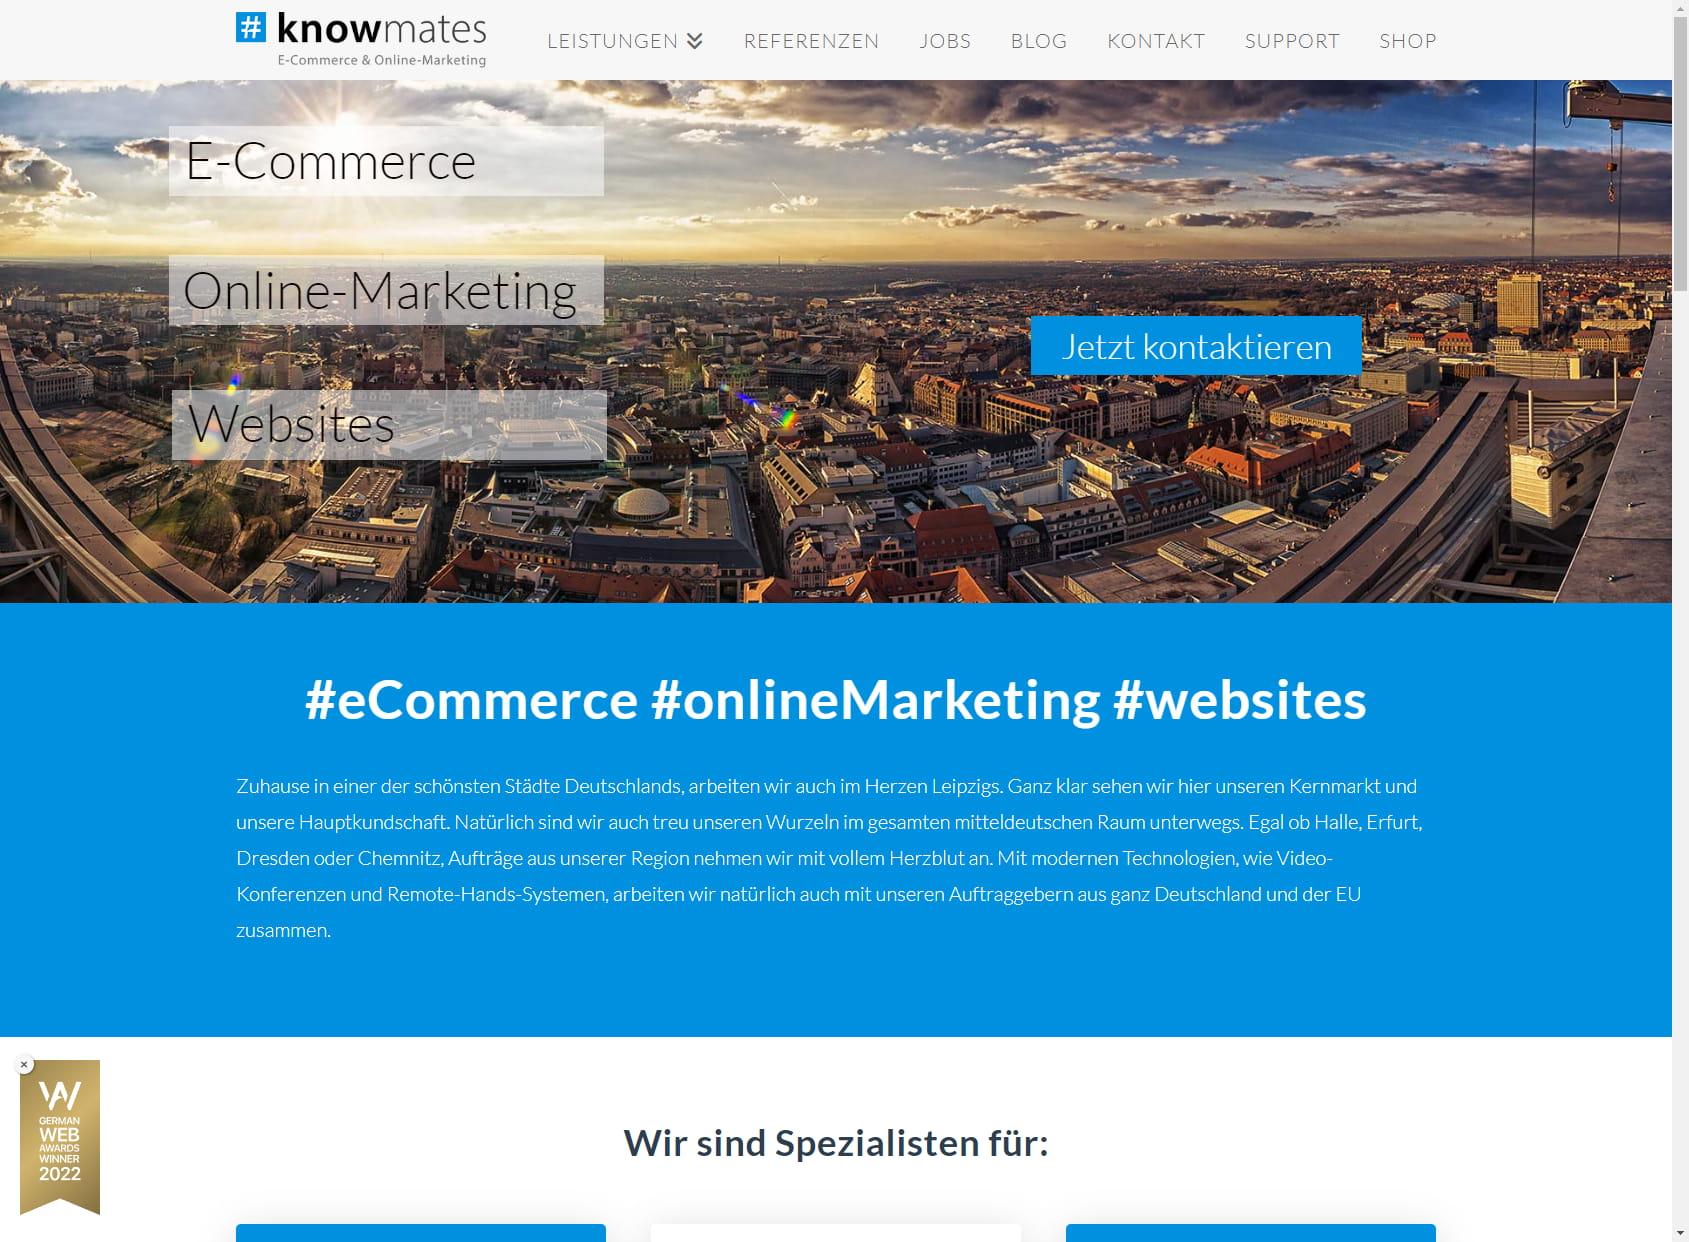 knowmates GmbH - E-Commerce & Online-Marketing